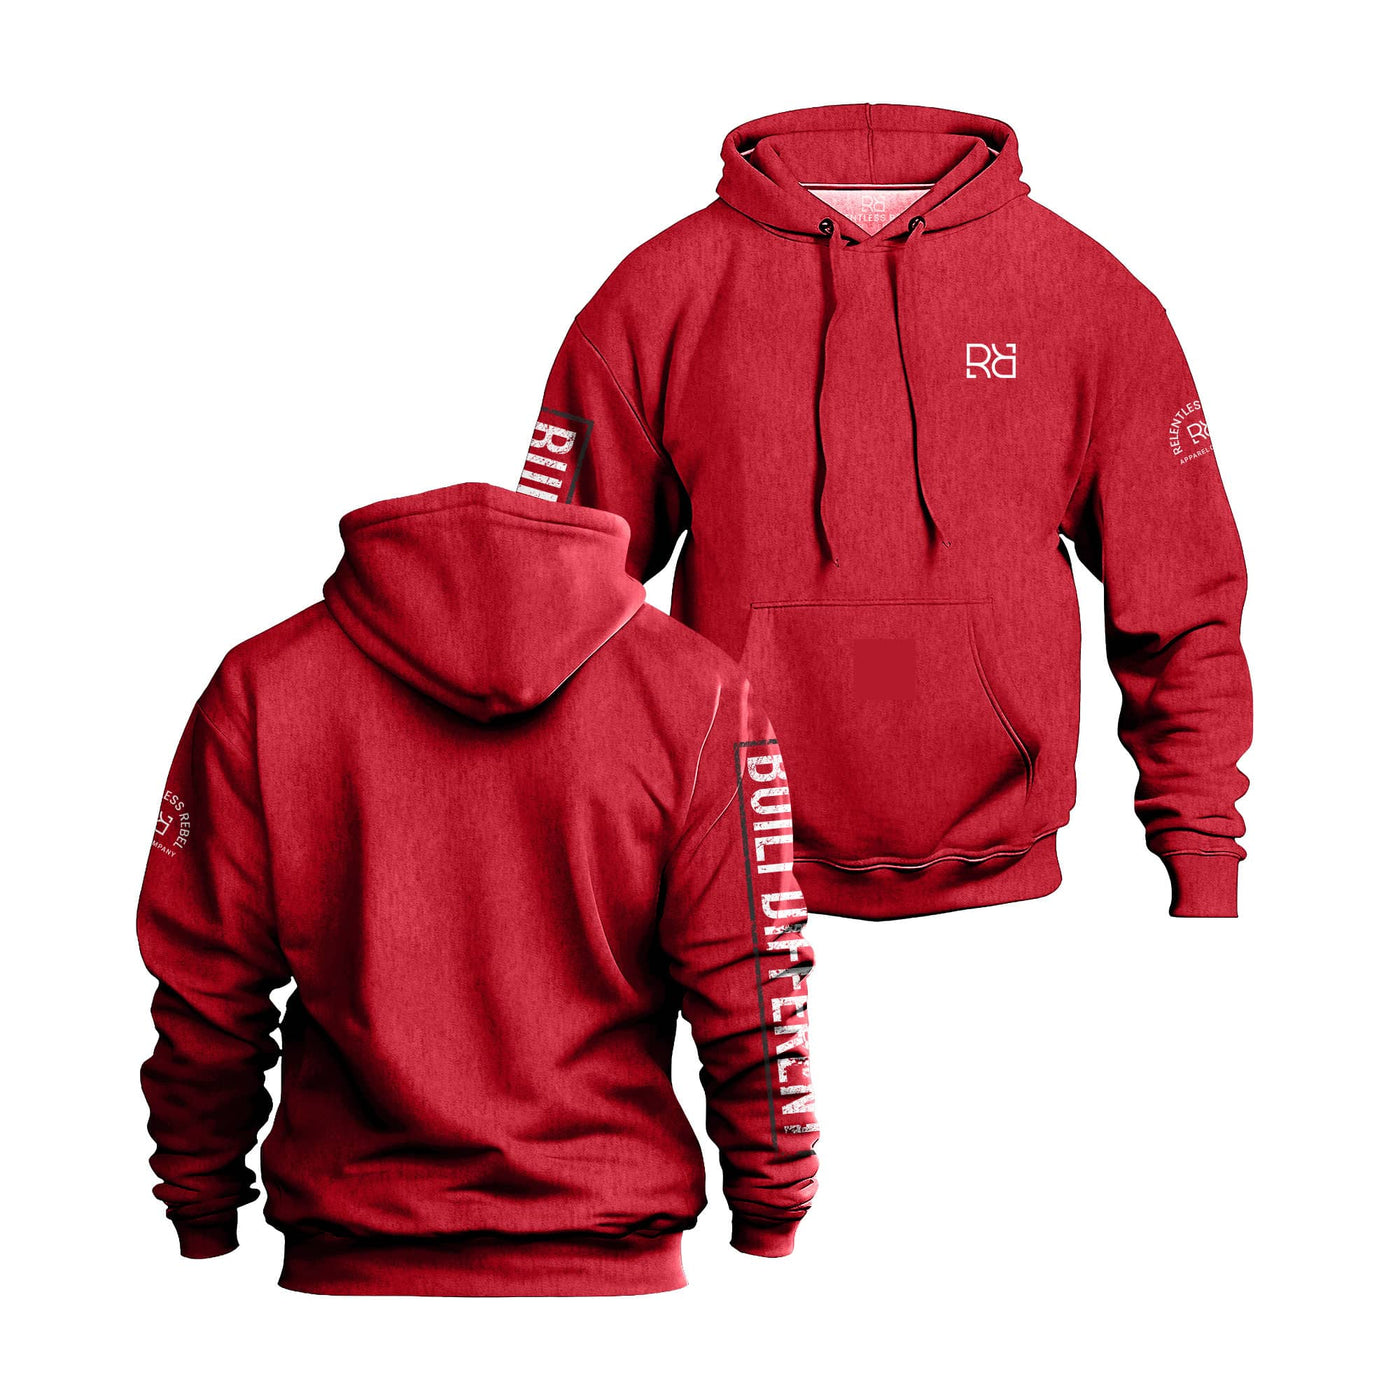 Rebel Red Built Different Men's Sleeve Design Hoodie